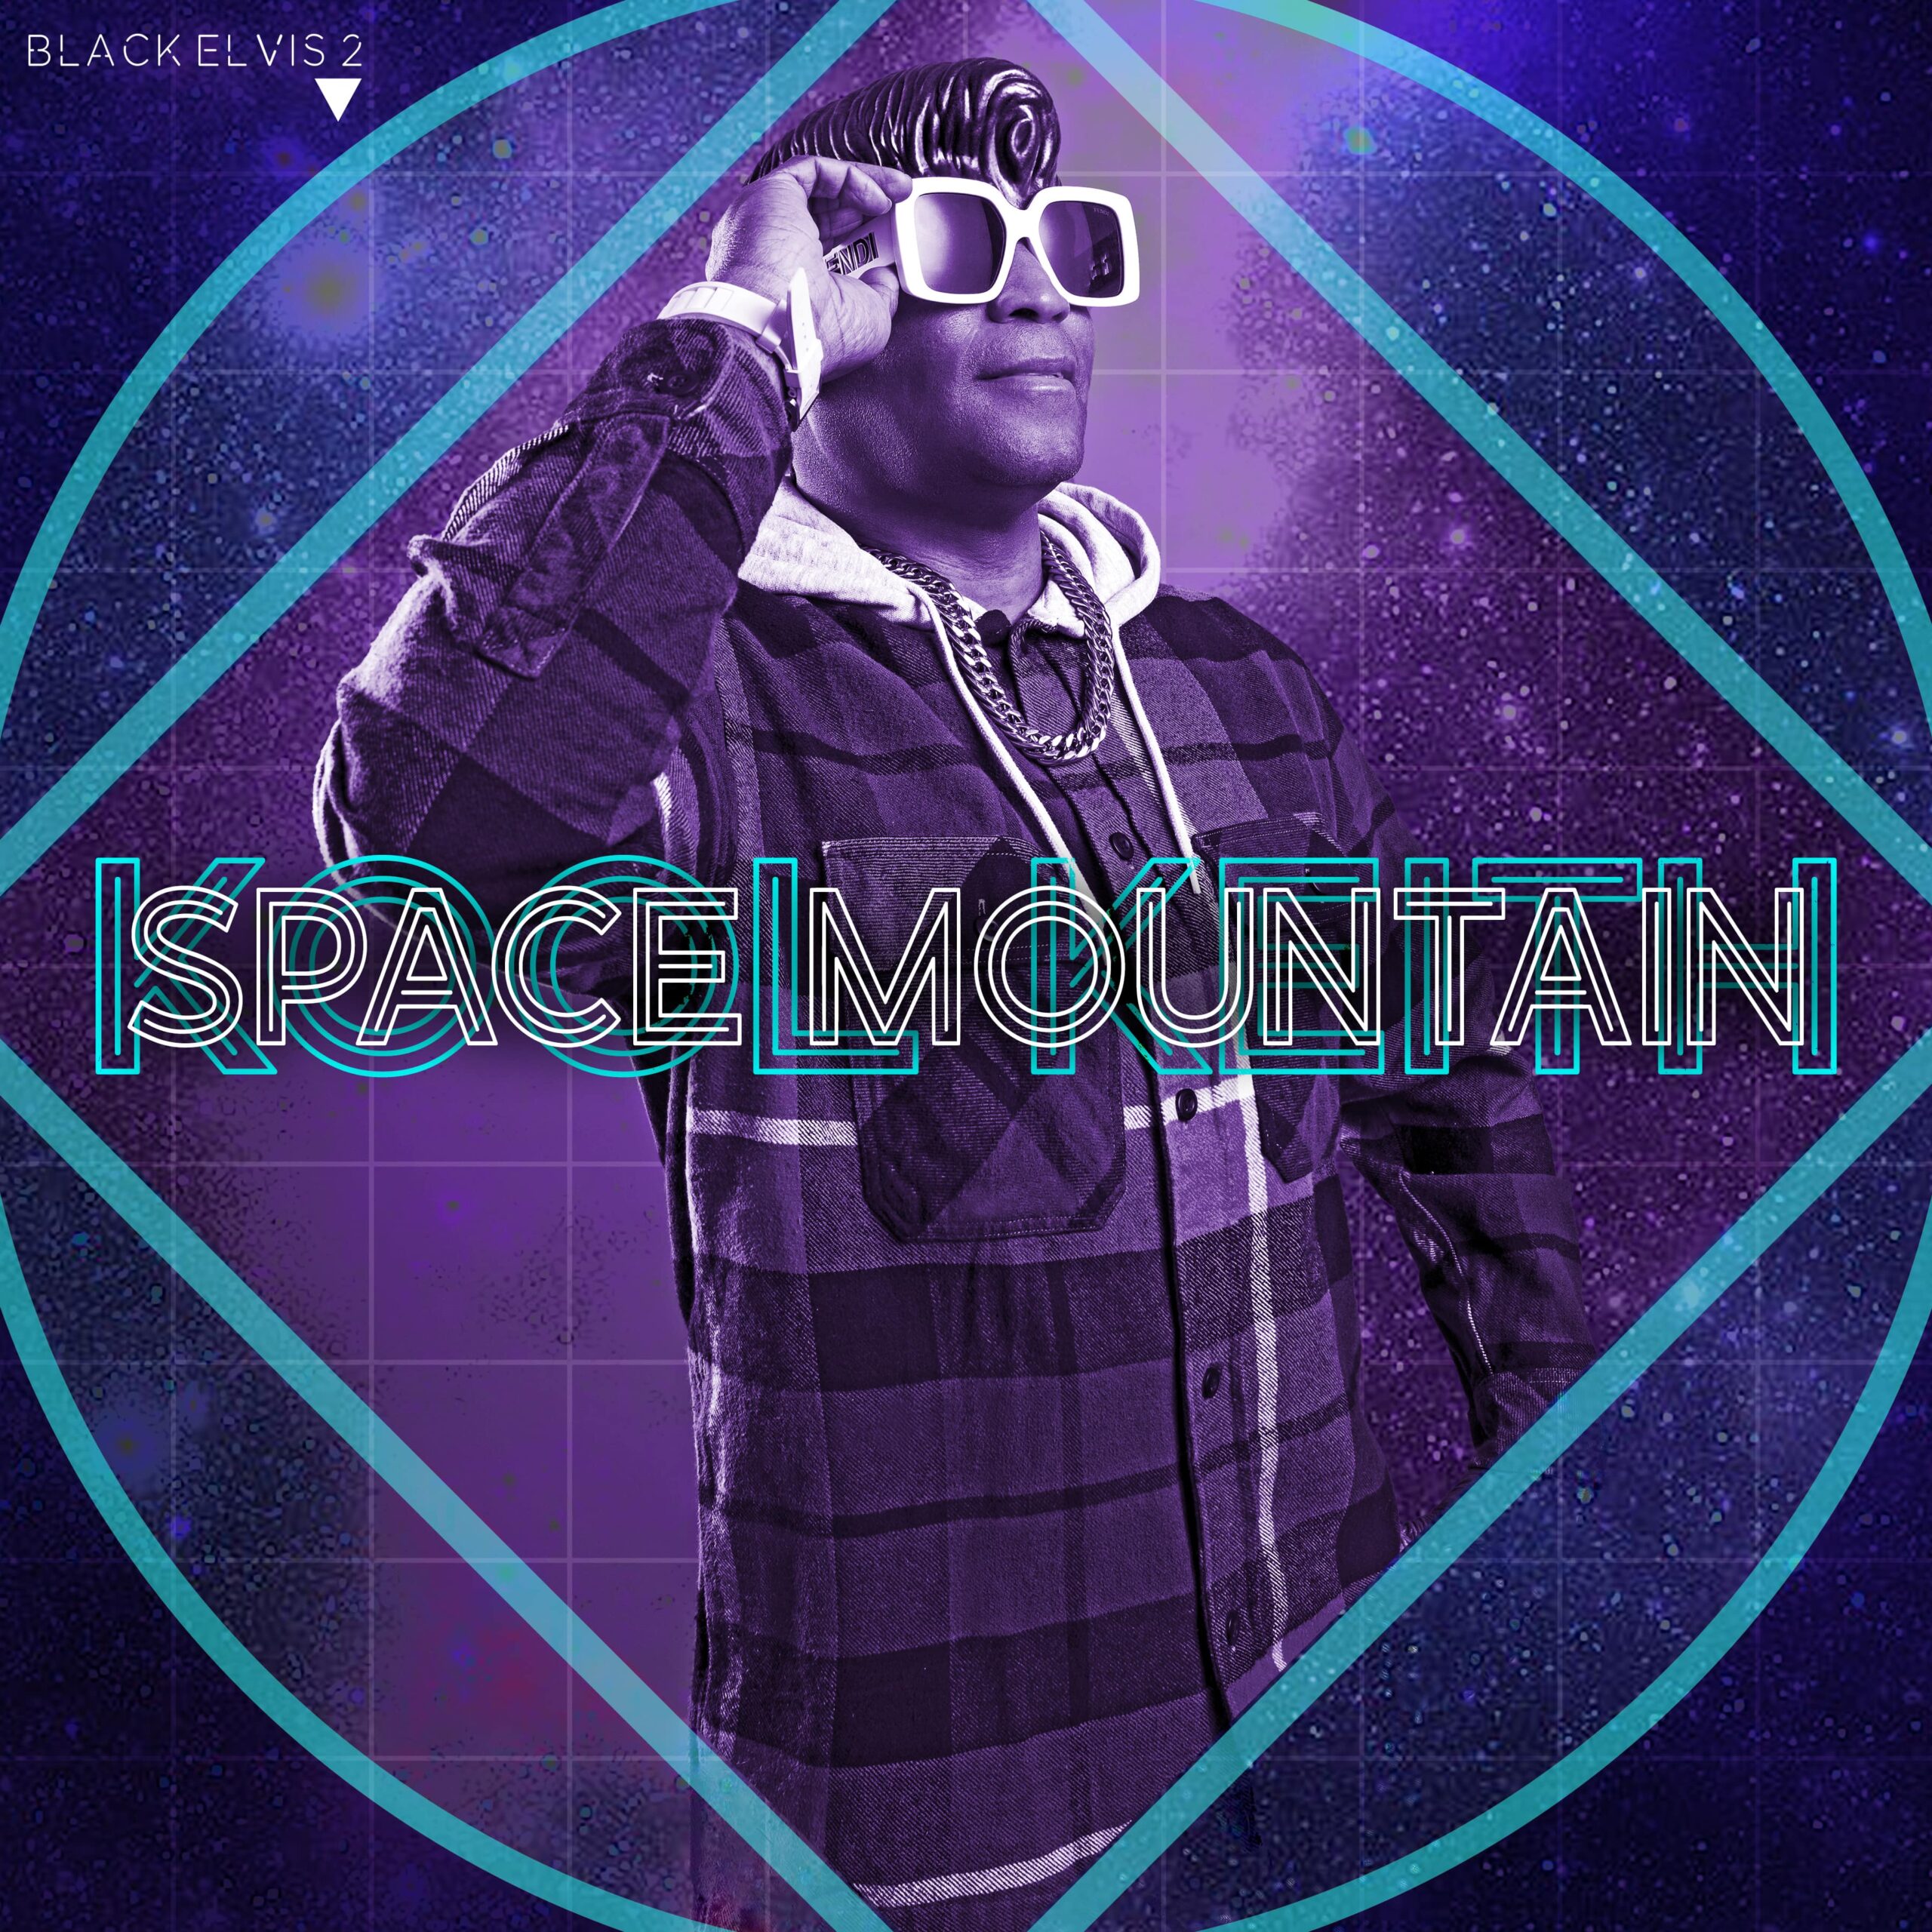 Kool Keith drops new single ‘Space Mountain’